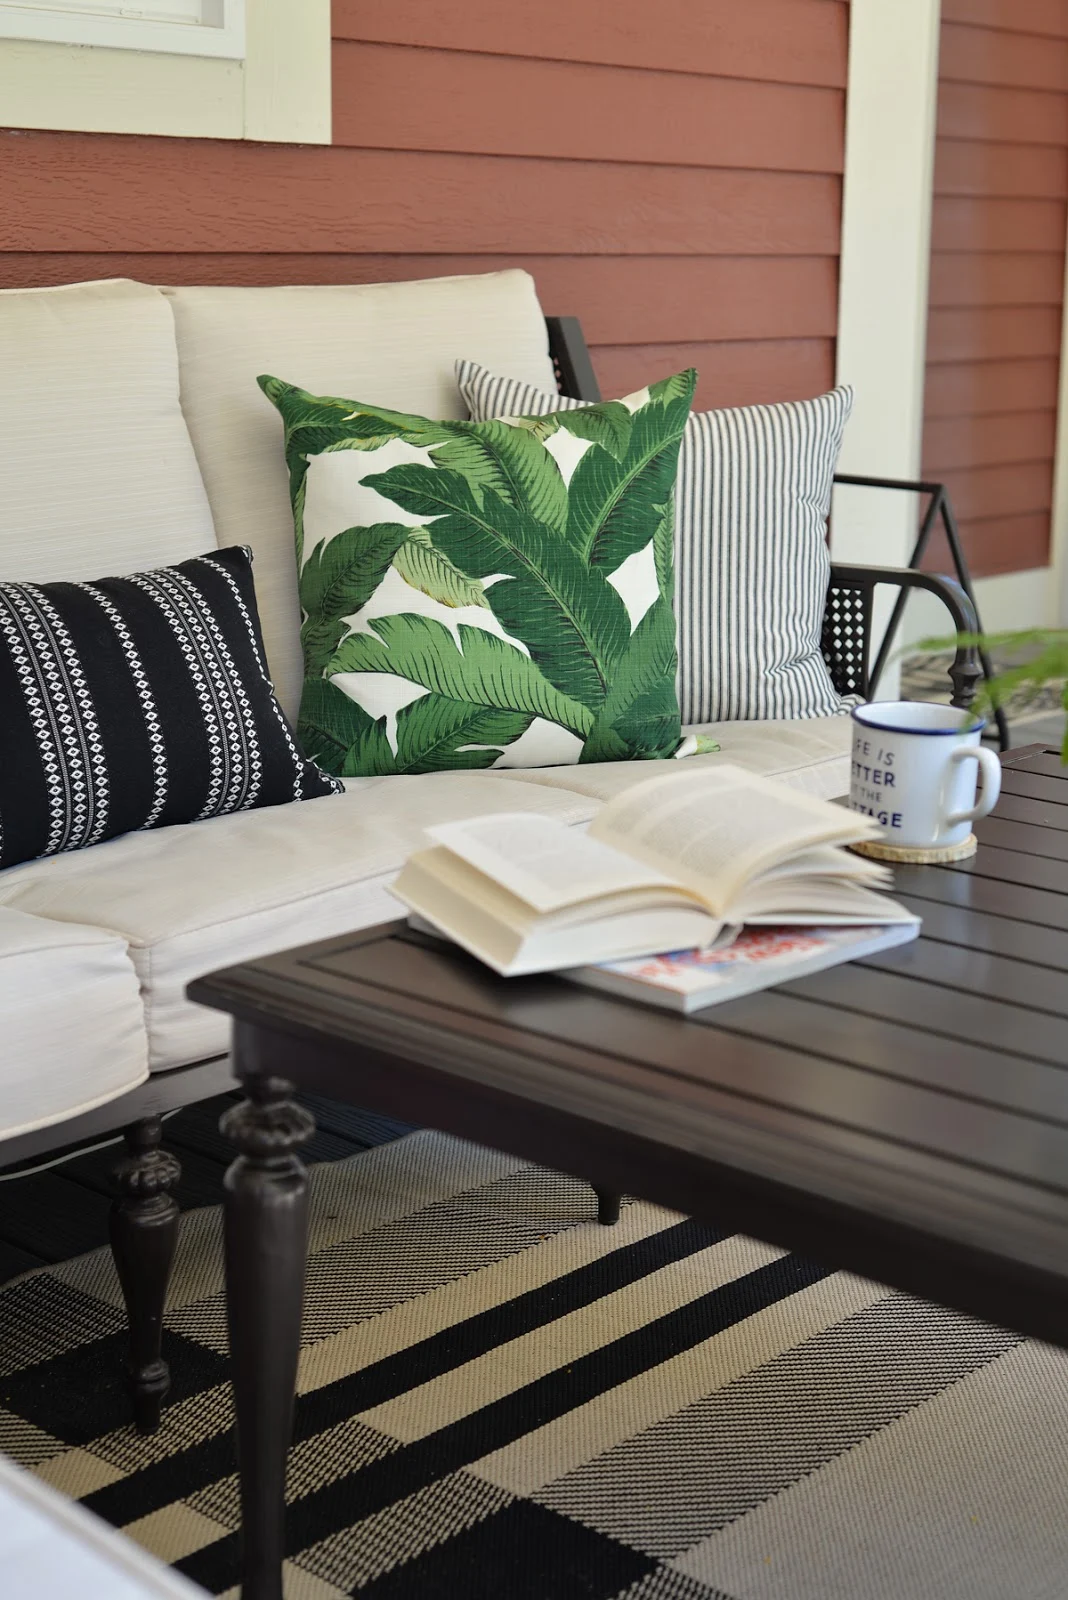 RamblingRenovators.ca | porch decor | British Colonial outdoor furniture, ticking stripe, palm leaves